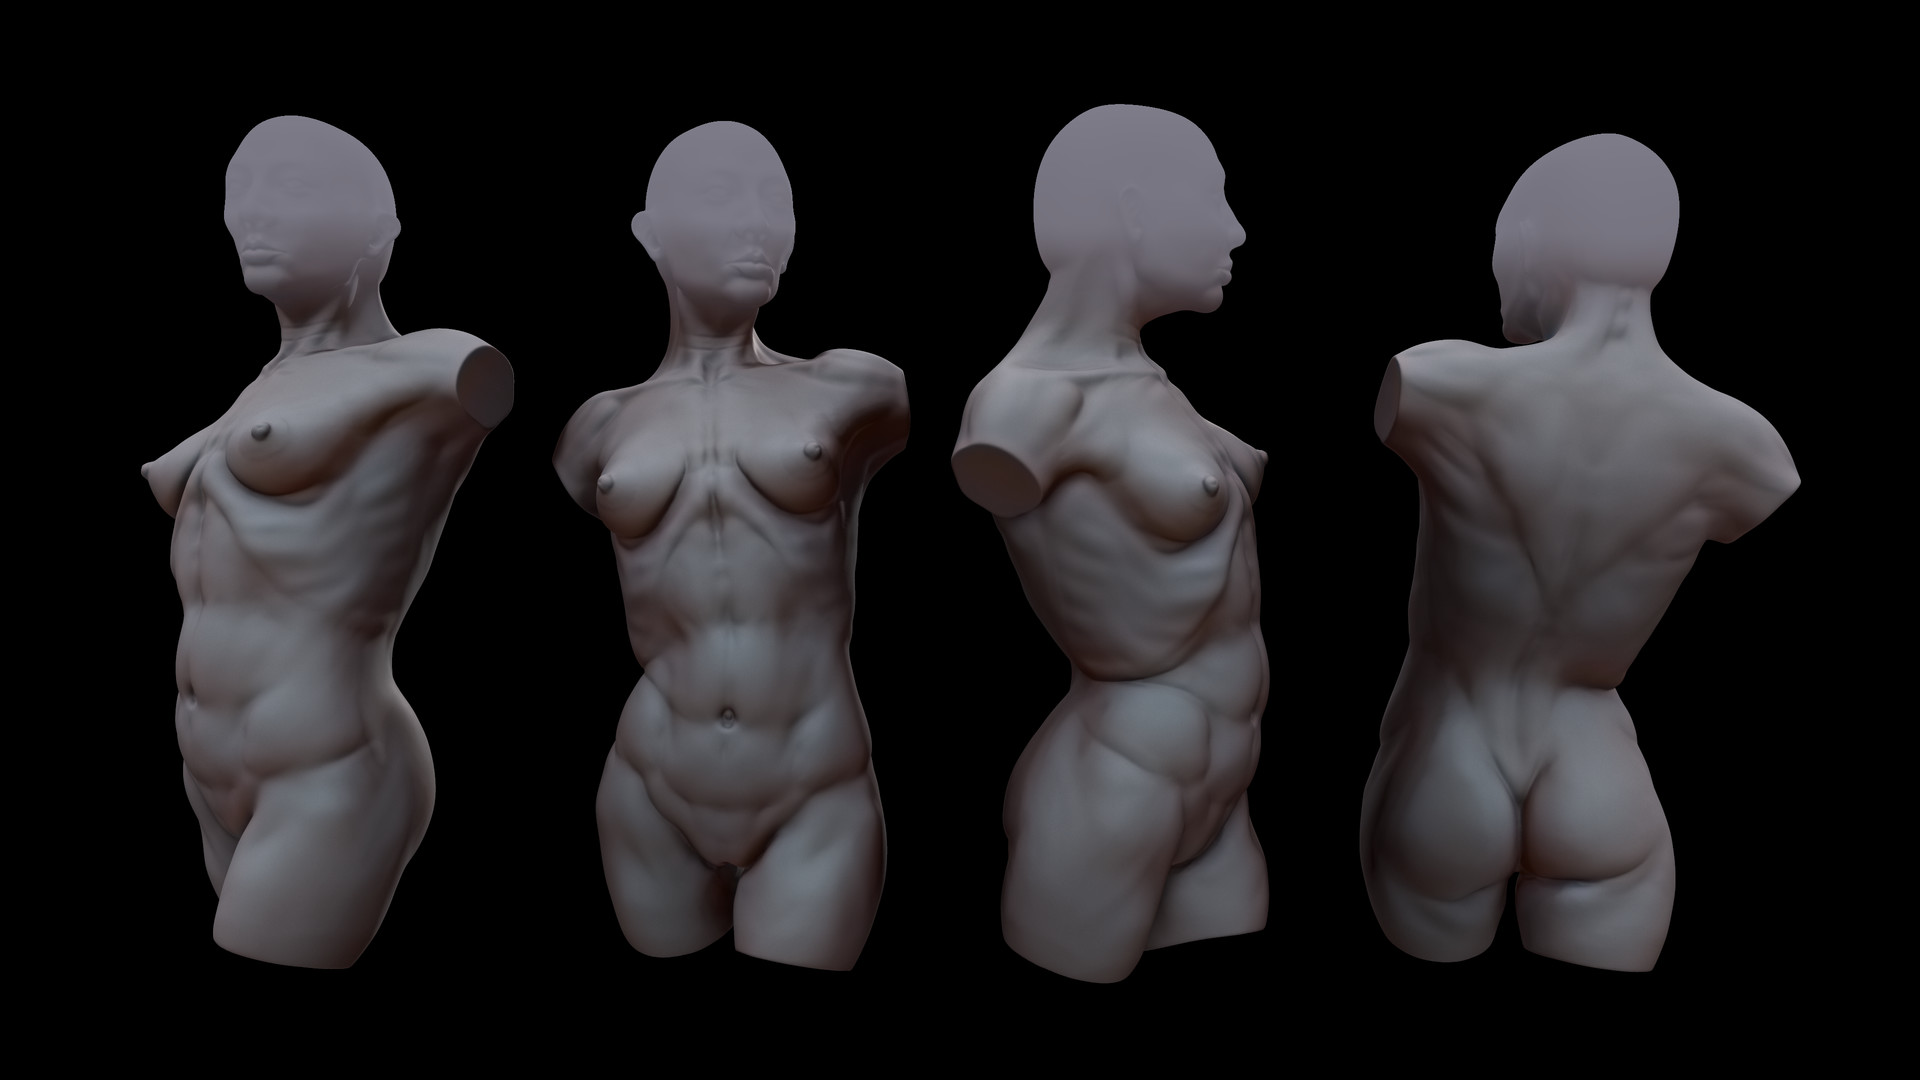 ArtStation - Female body sculpting practice